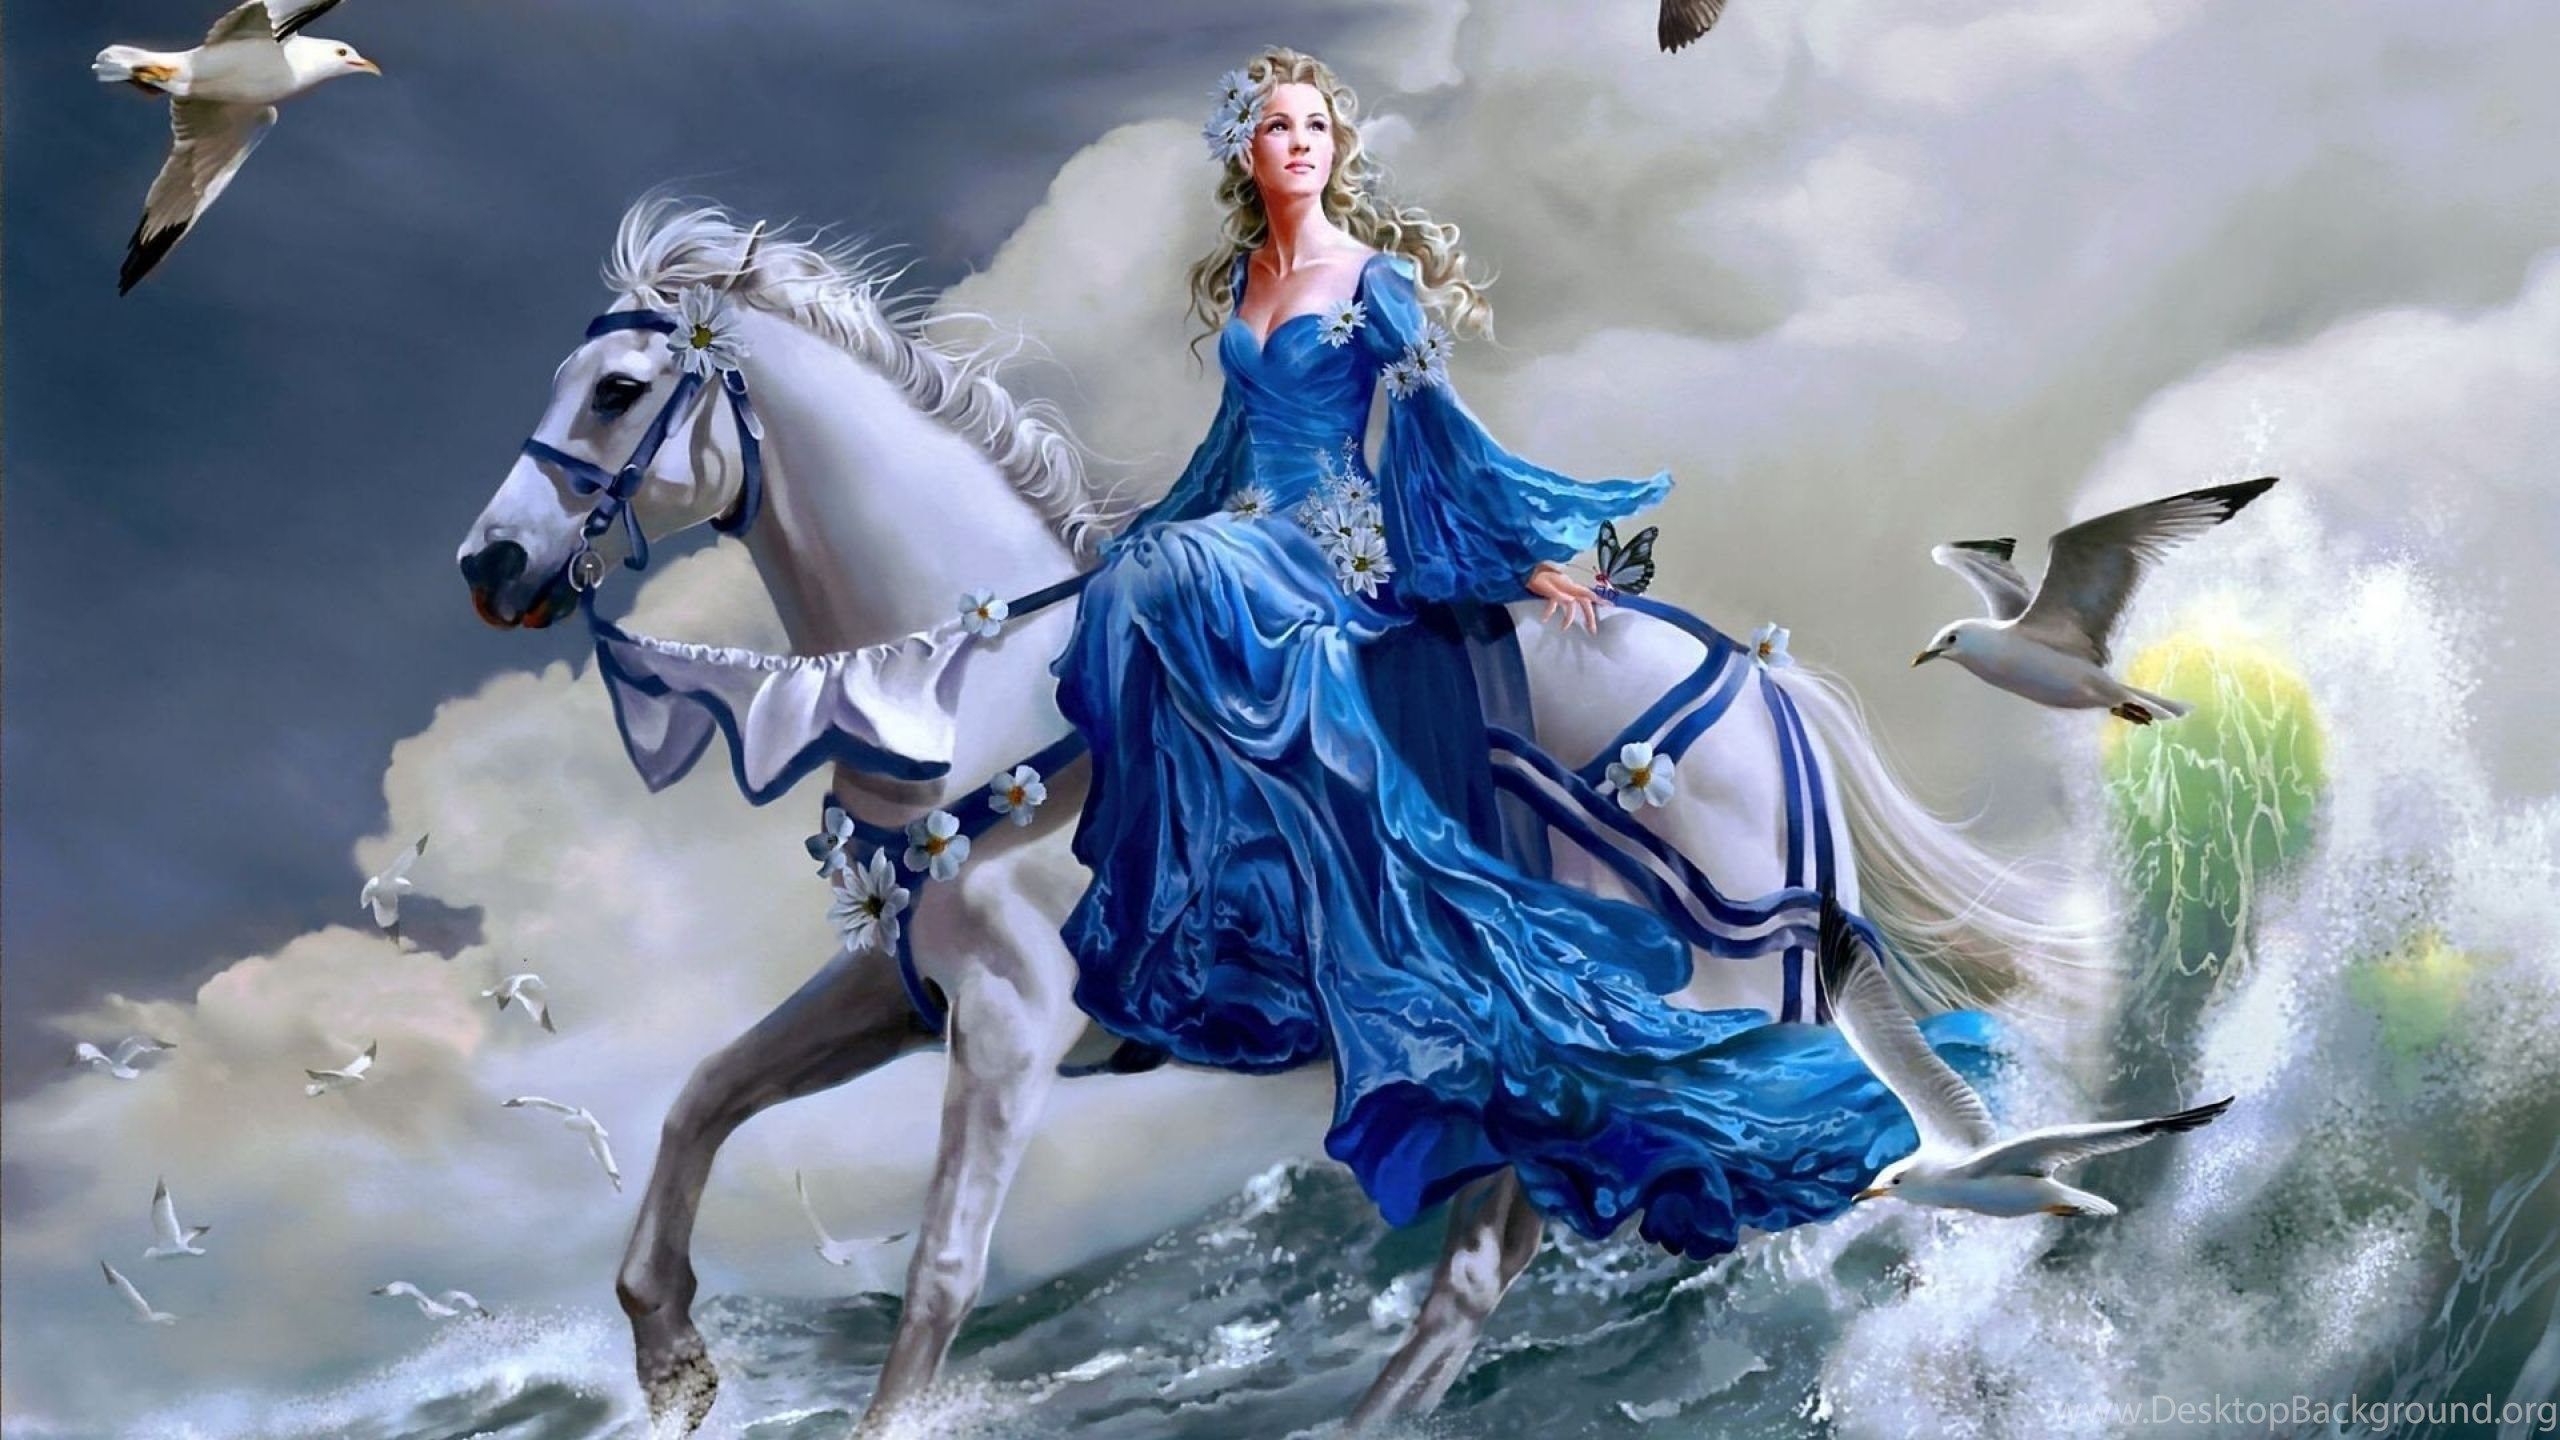 Girl Riding A Horse On Water 2560x1440 Fantasy Wallpaper 28685. Desktop Background